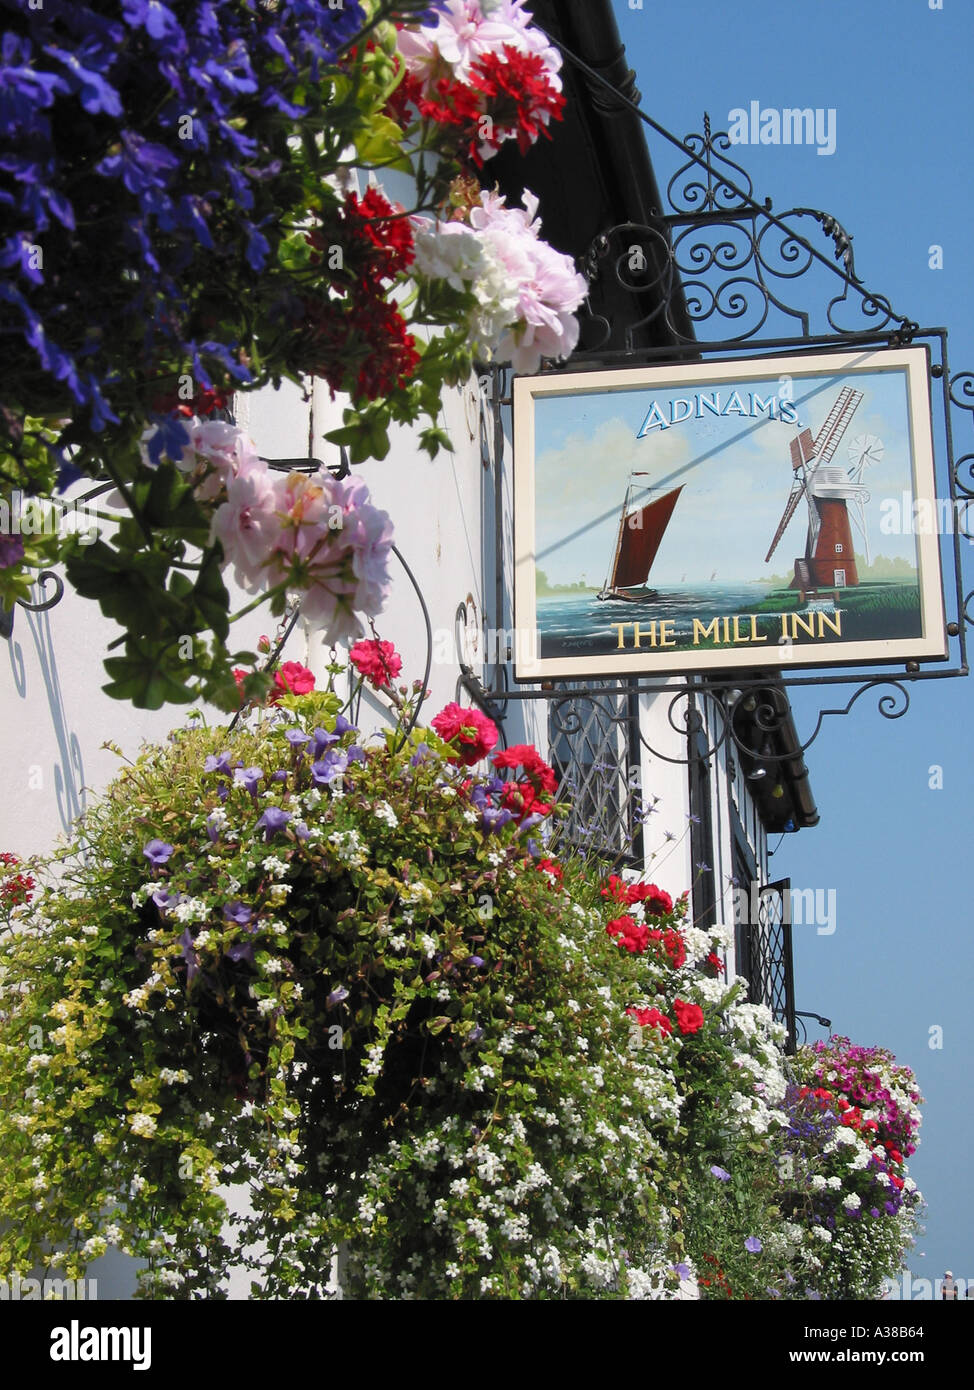 Traditional Pub Bar Sign The Mill Inn Aldeburgh Suffolk England Great Britain Stock Photo